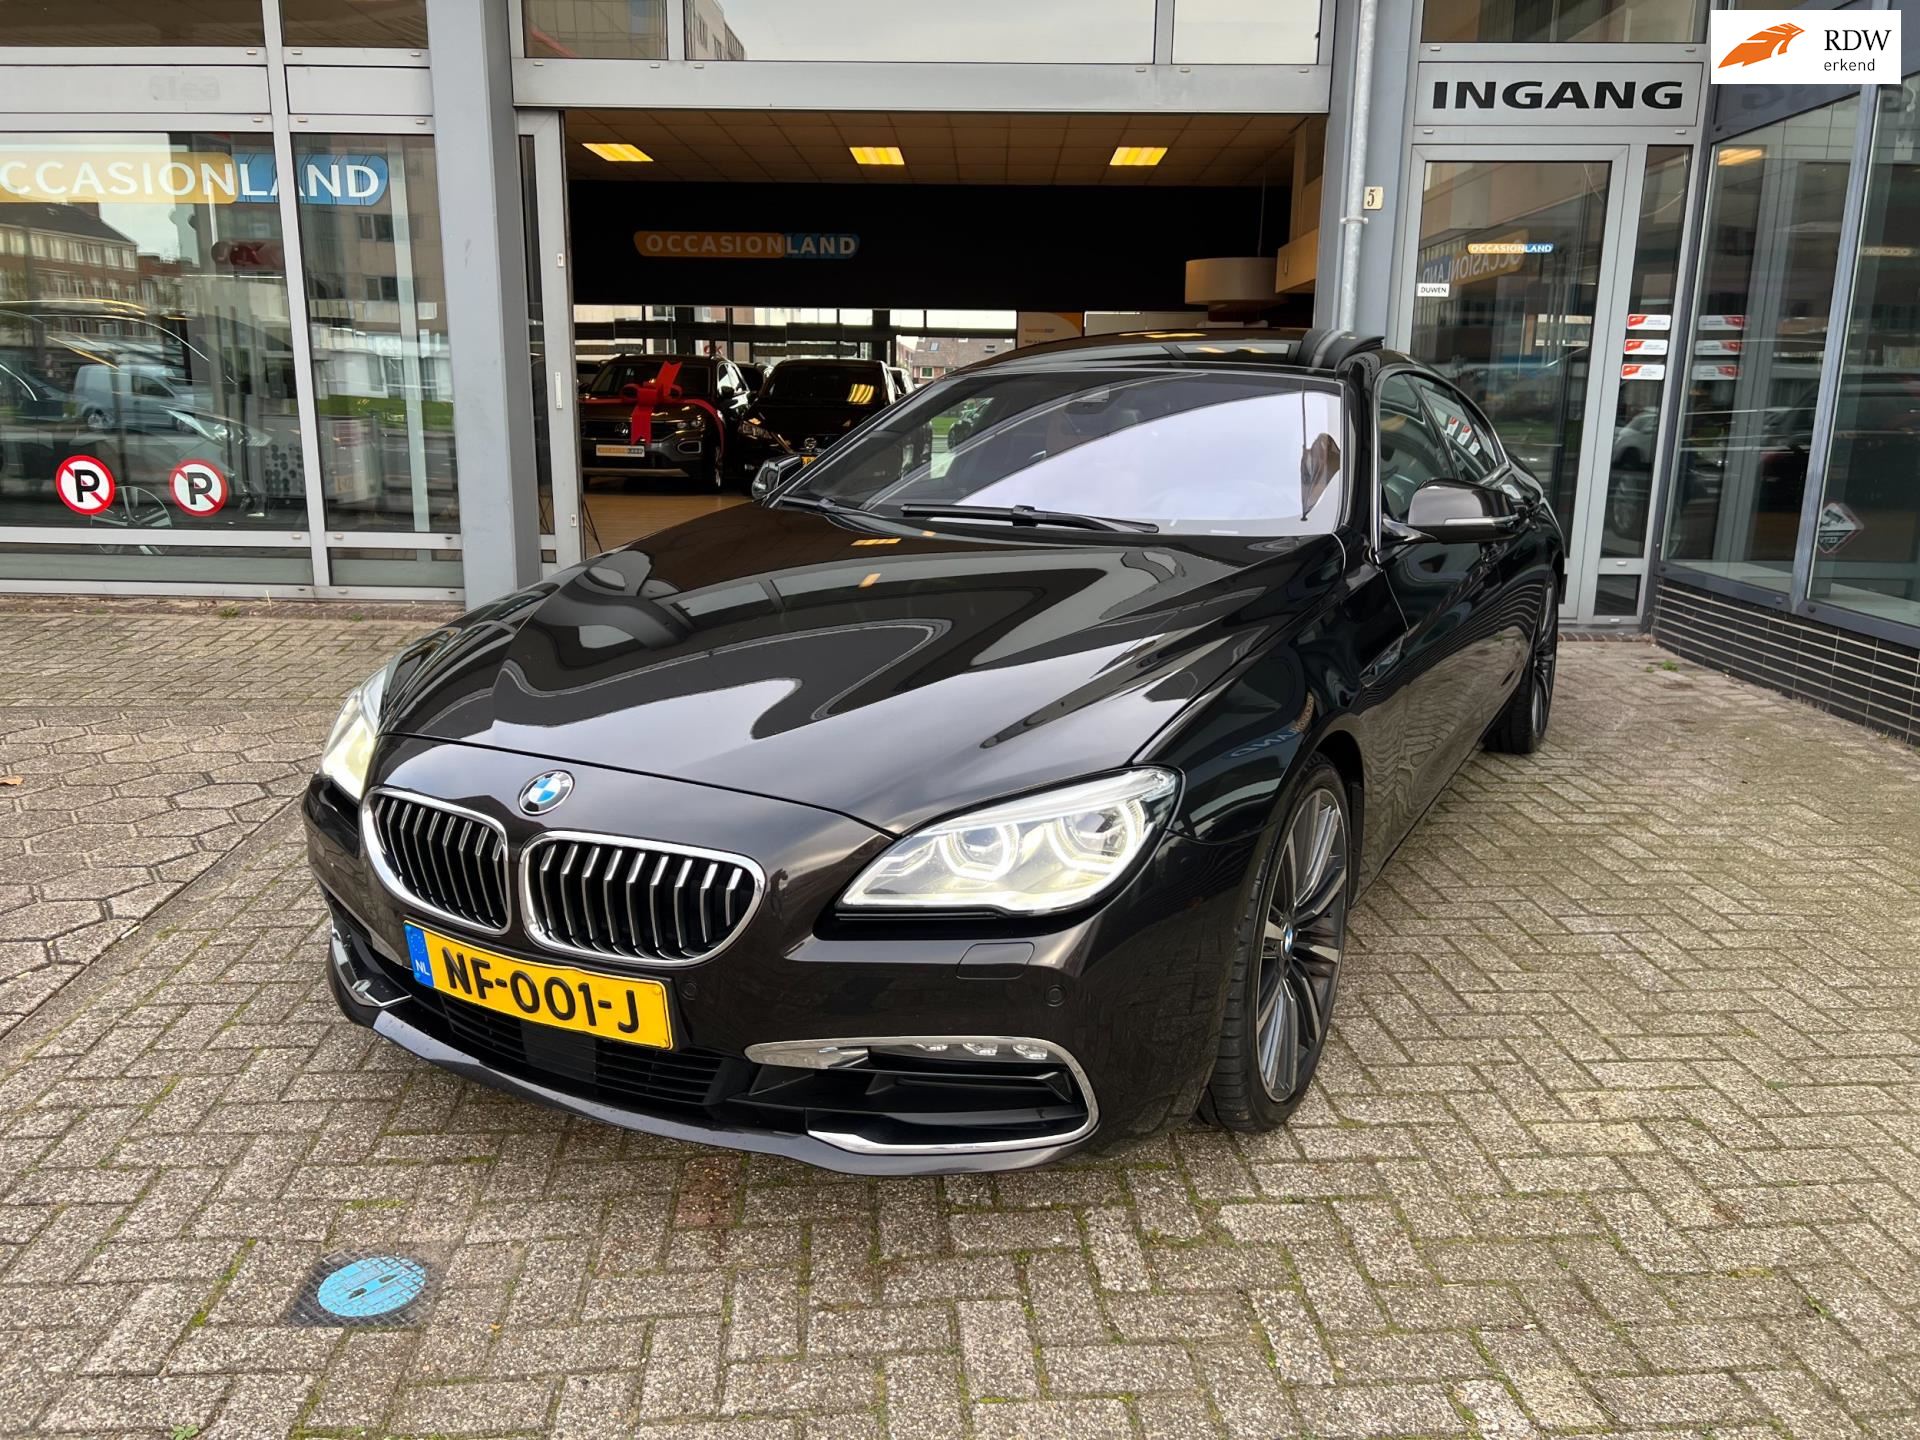 BMW 6-serie Gran Coupé occasion - Occasionland